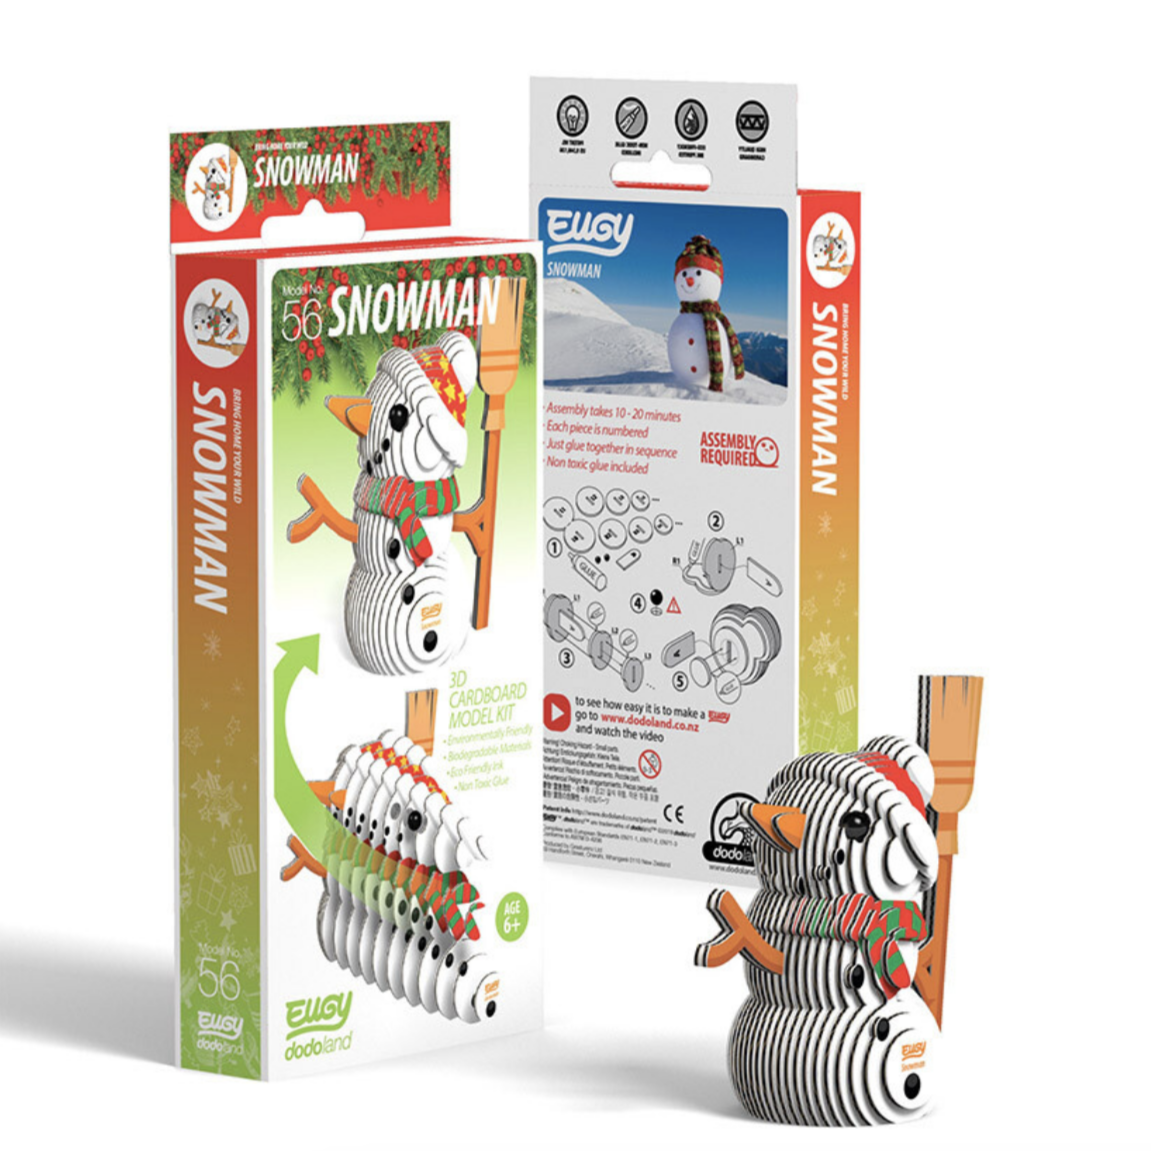 Snowman 3-D model kit (6-14yrs)